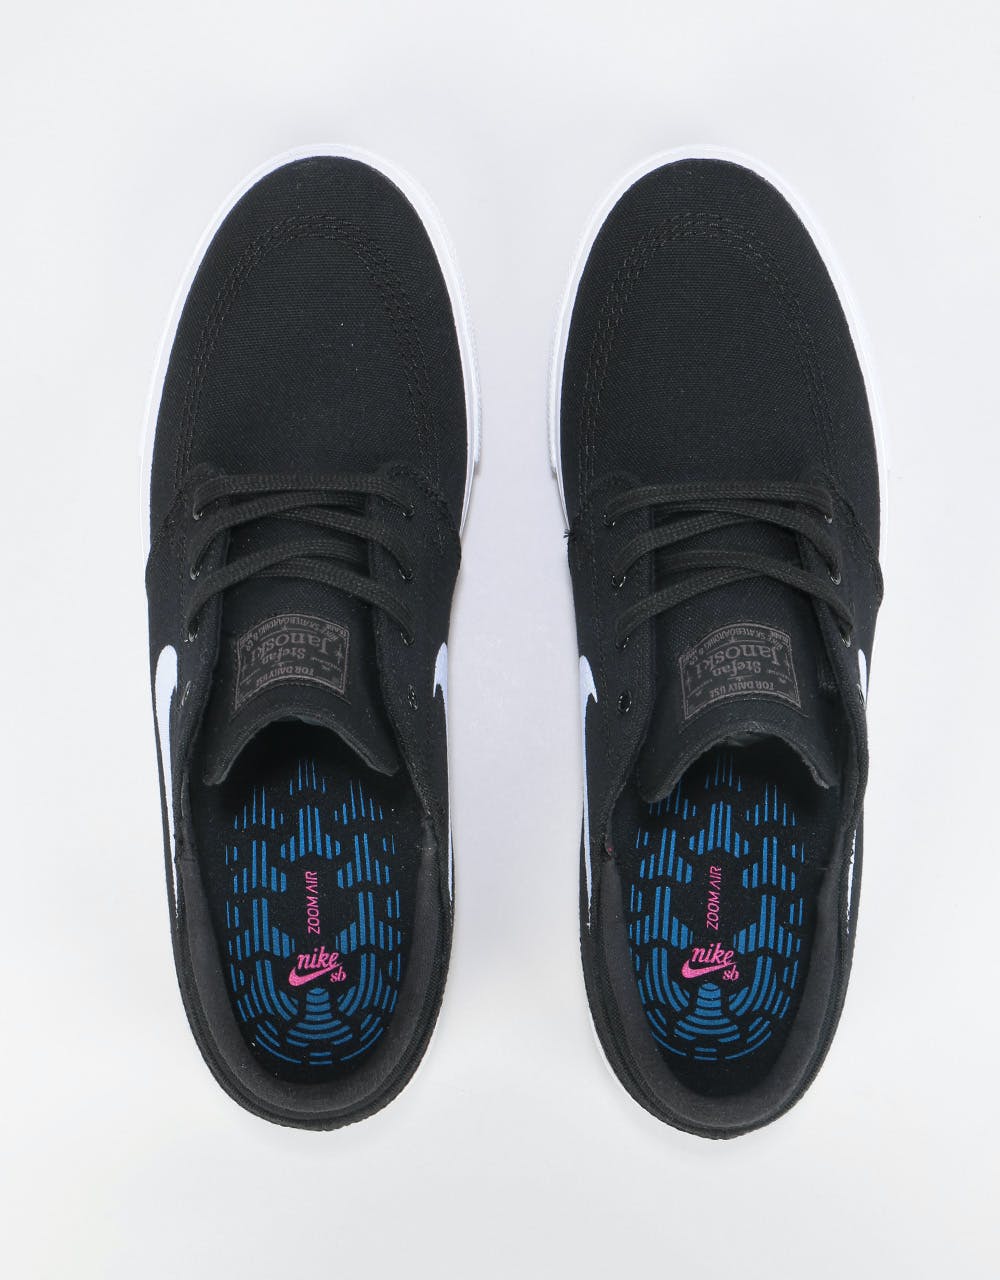 Nike SB Zoom Janoski RM Canvas Skate Shoes - Black/White-Thunder Grey